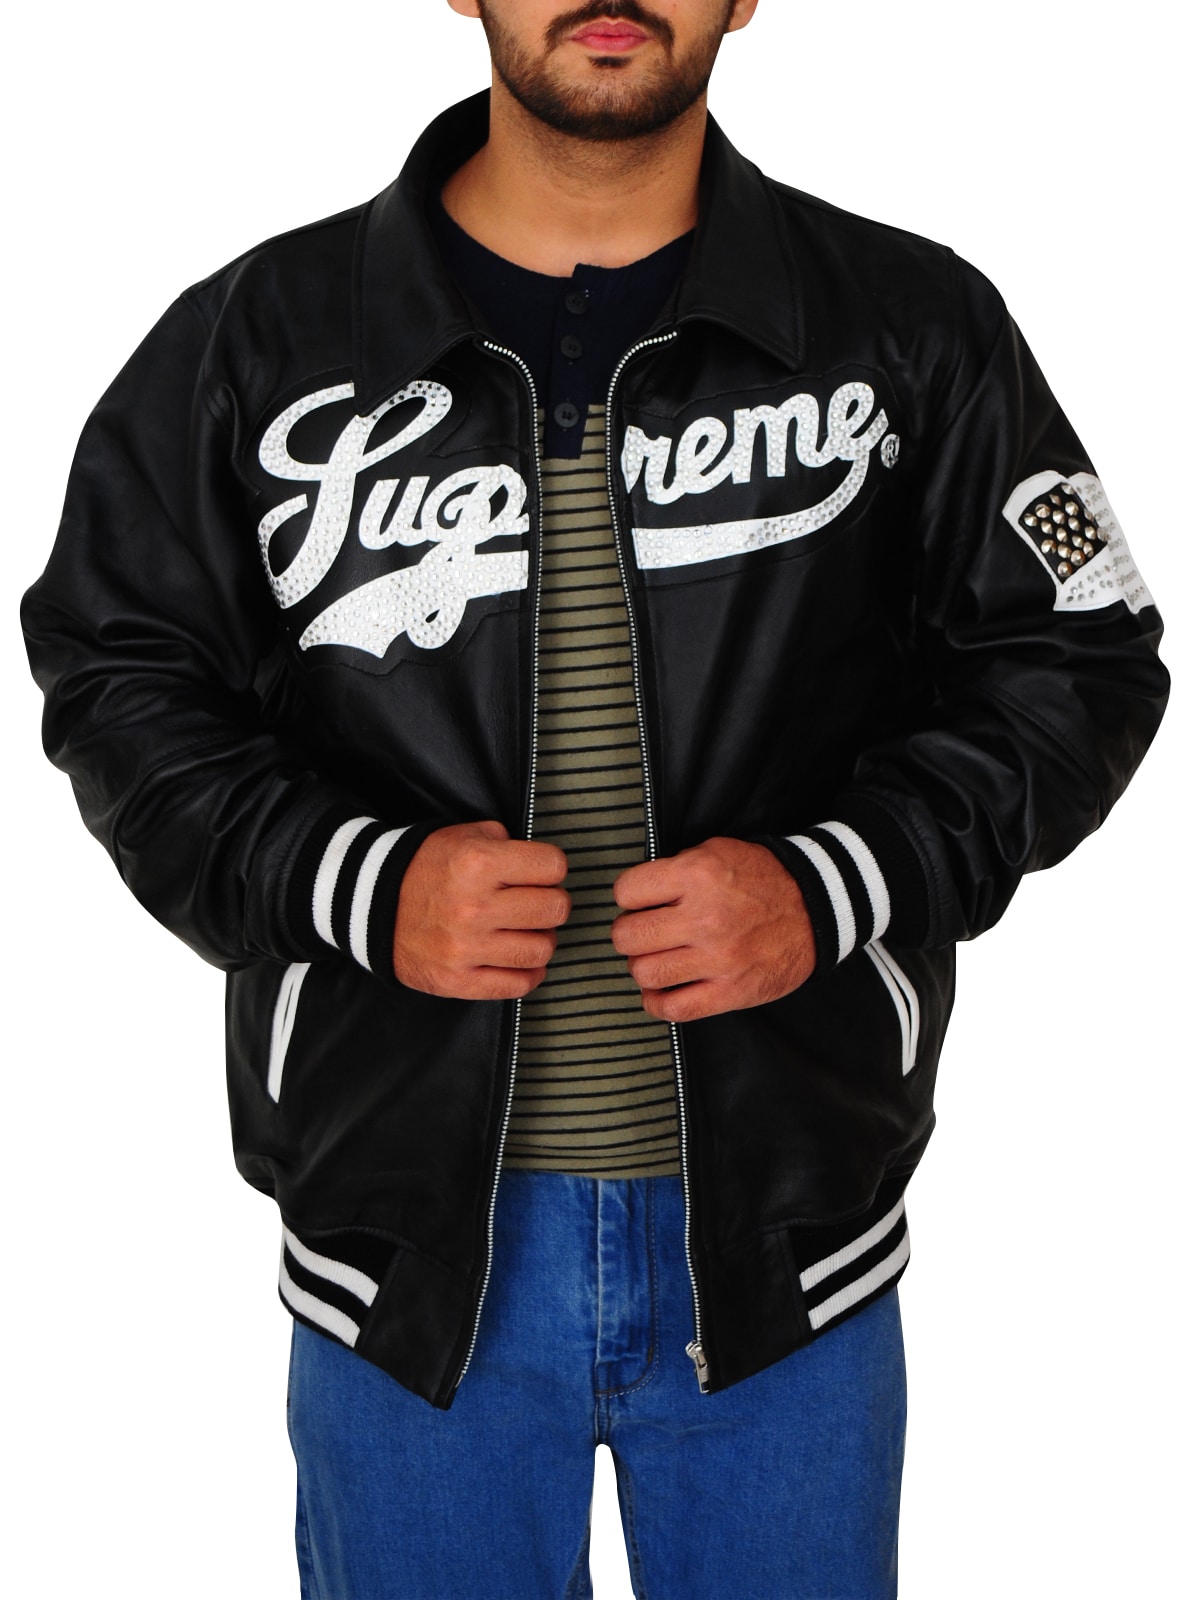 Supreme Black Leather Jacket | Next Leather Jackets